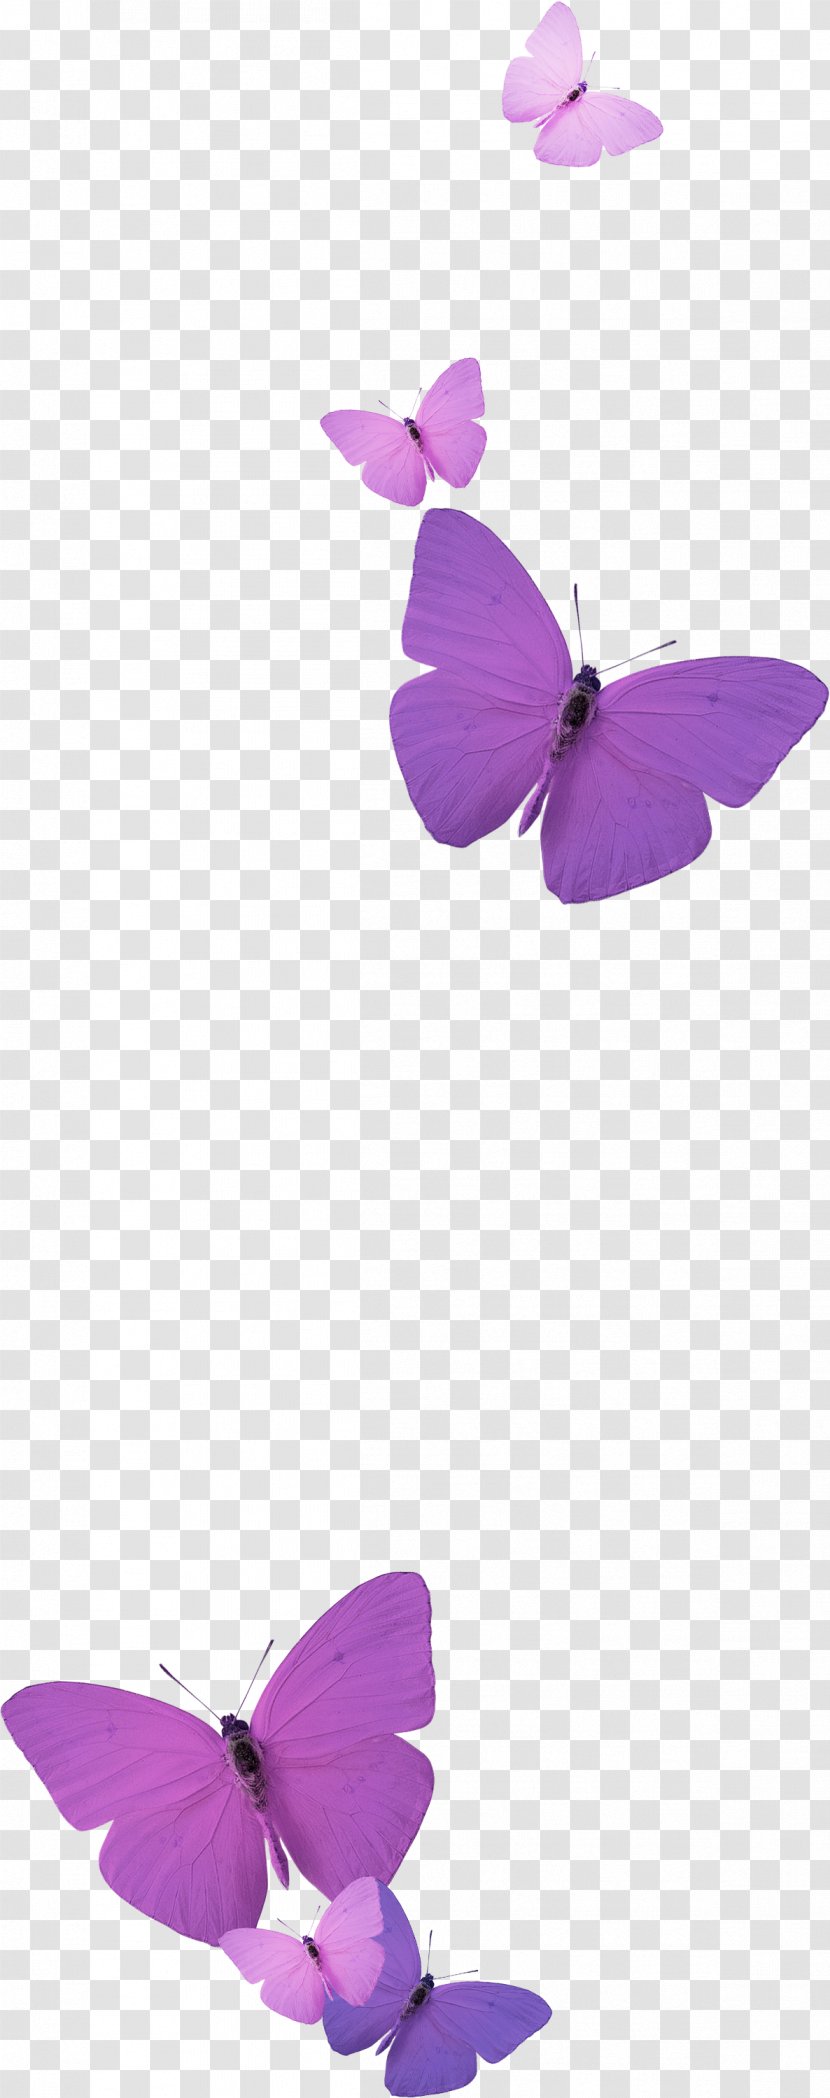 Tous Fashion Idea Butterflies And Moths - Lace - Butterfly Transparent PNG